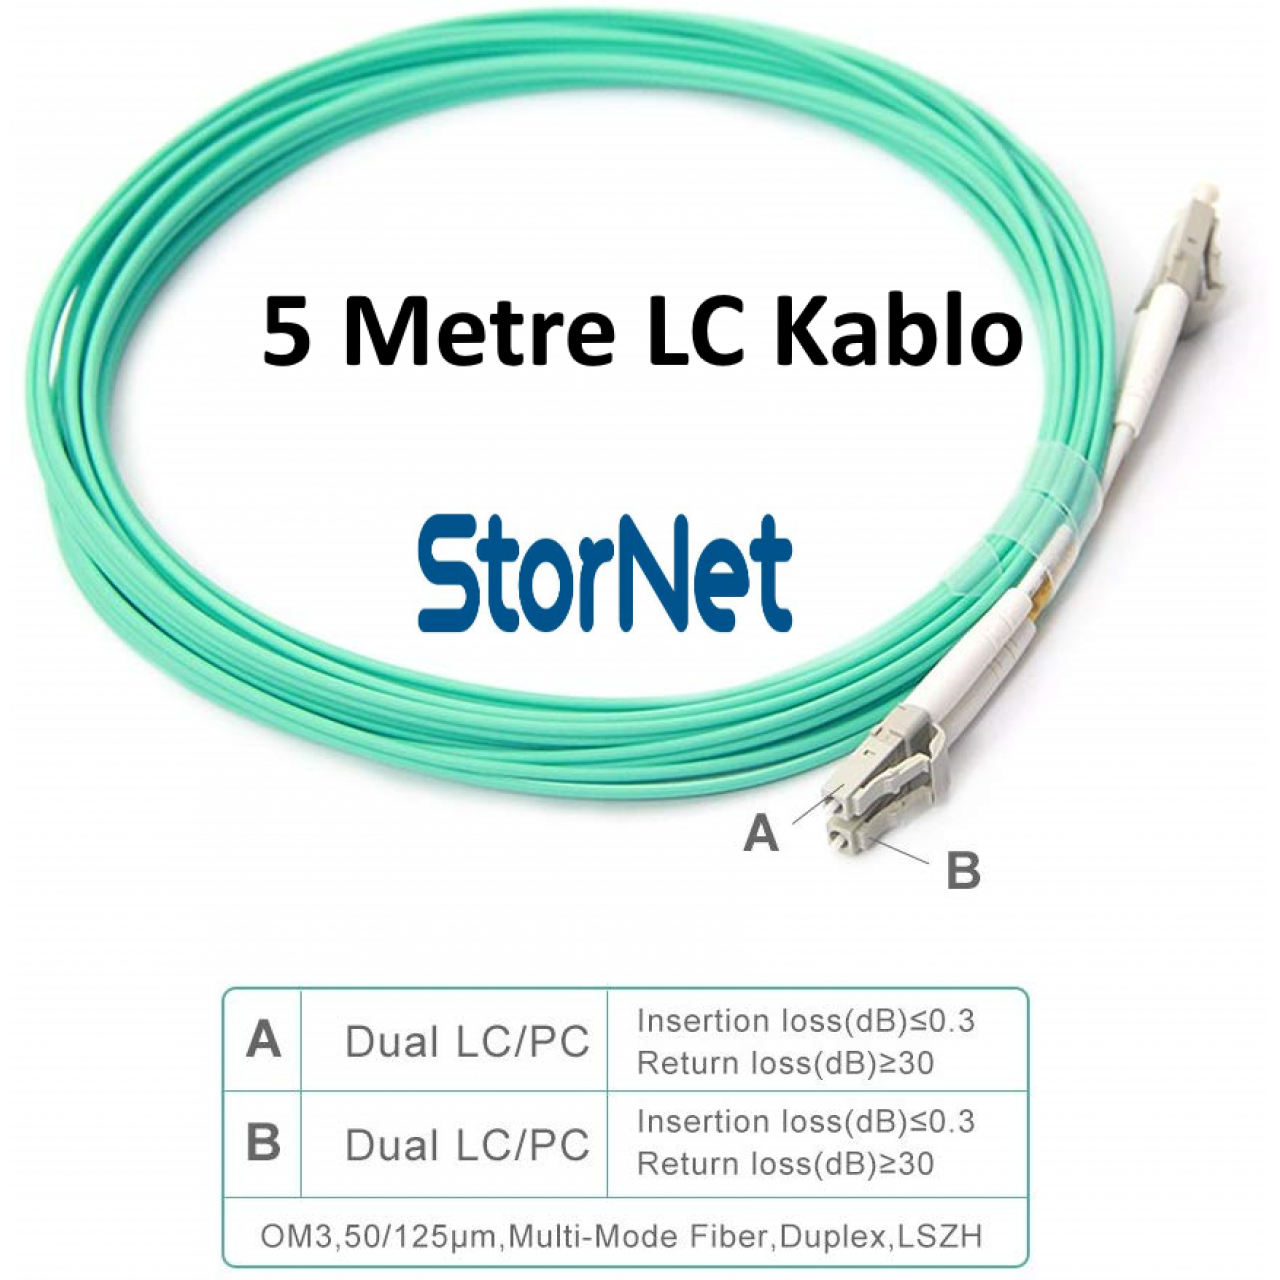 1 Metre LC to LC OM3 10G MM 50/125 Fiber Optic Patch Kablo